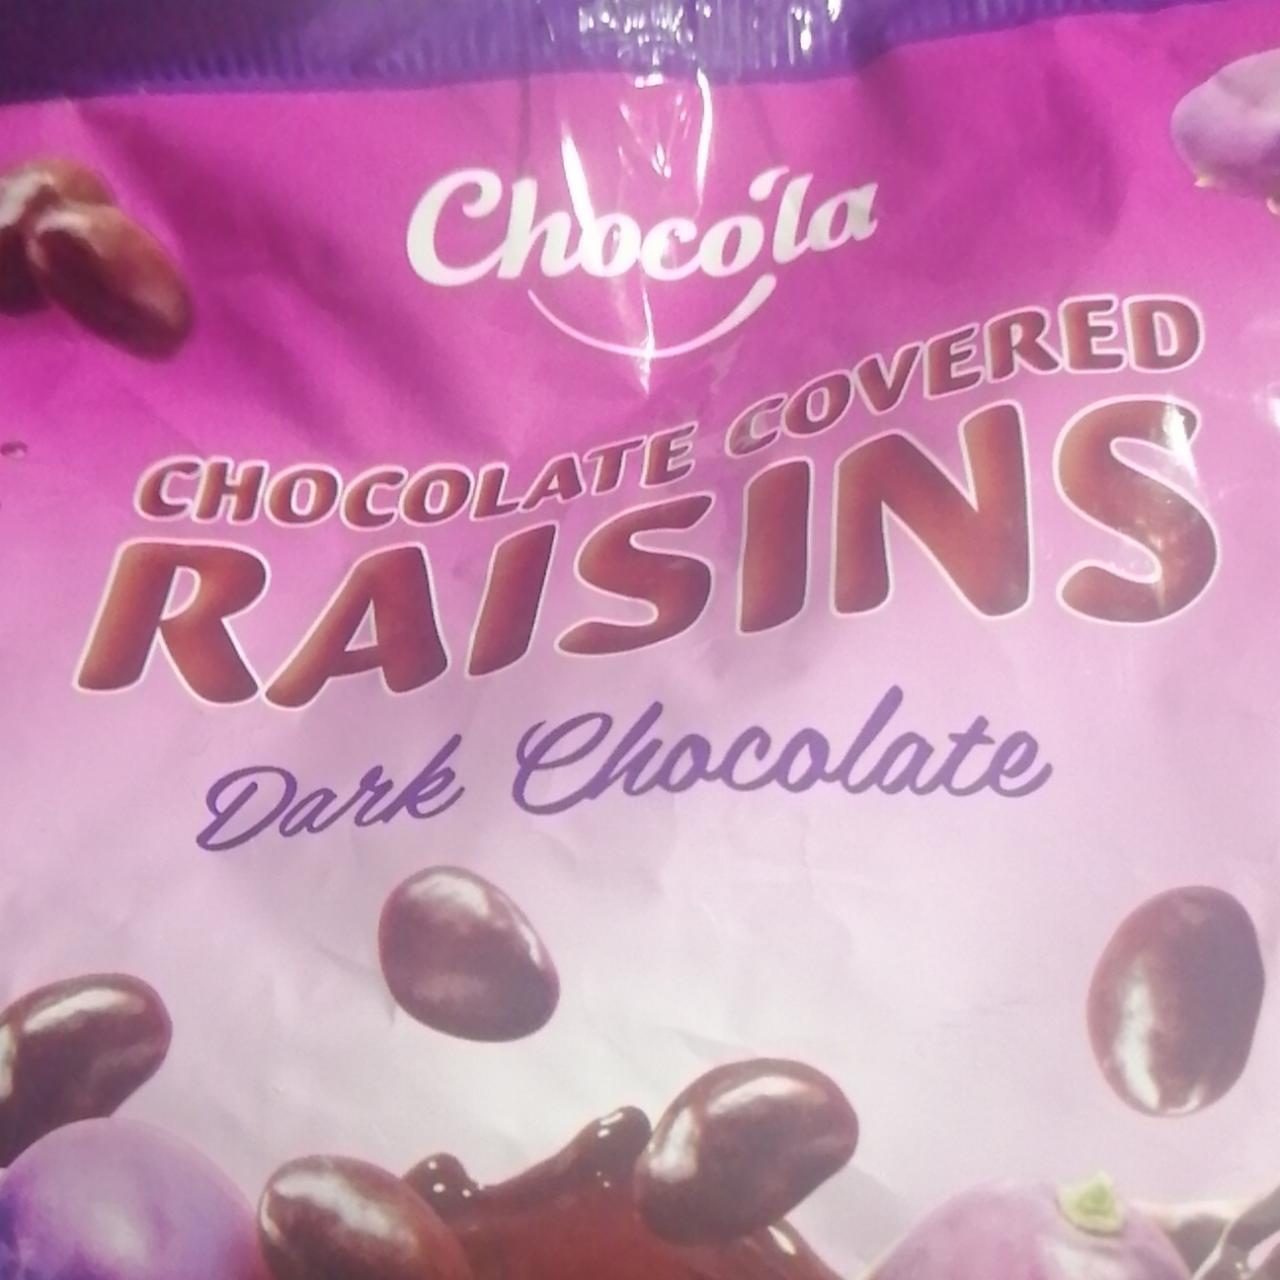 Képek - Chocolate covered raisins Dark chocolate Chocóla